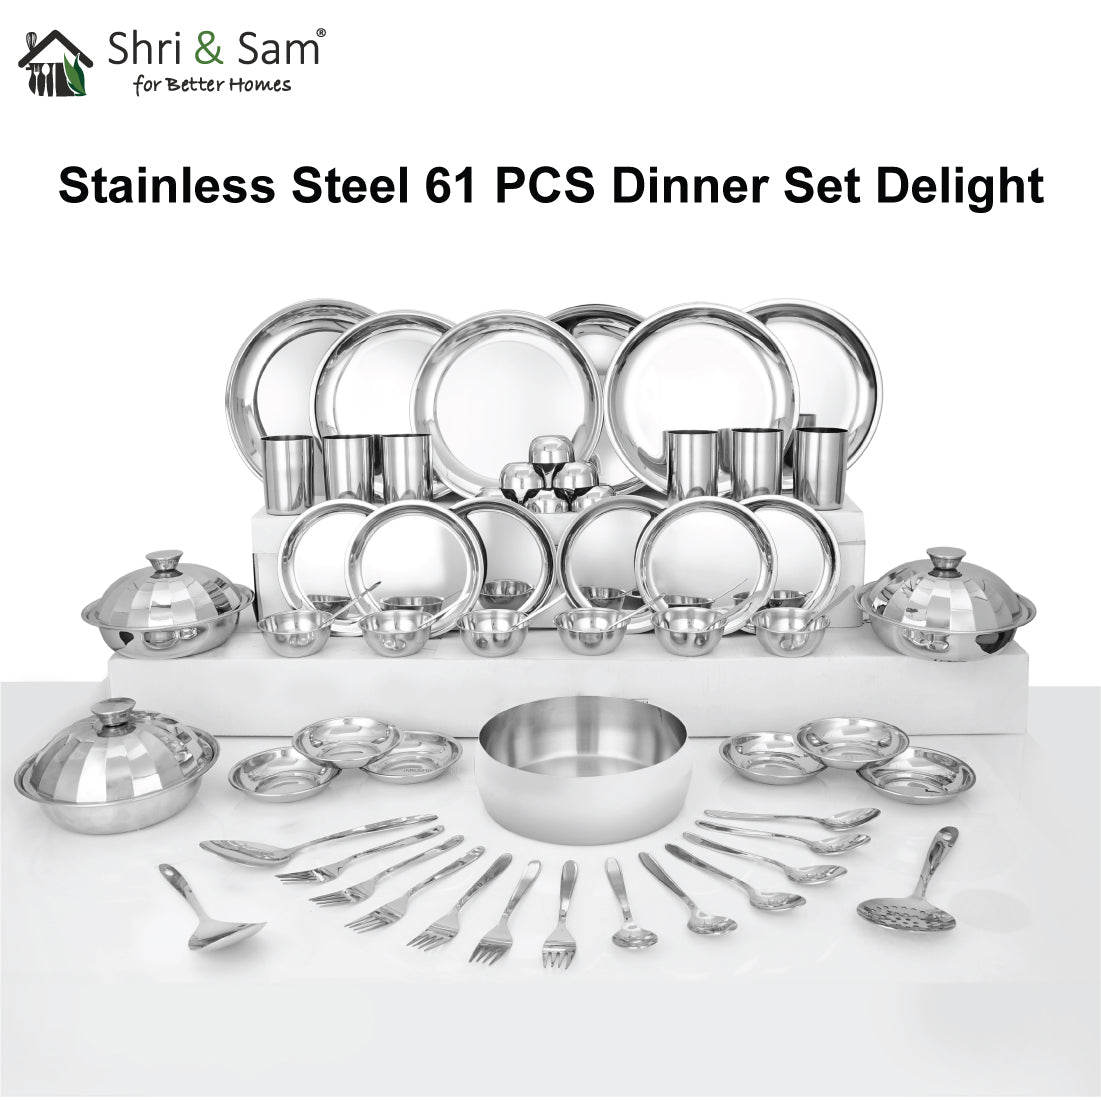 Stainless Steel 61 PCS Dinner set (6 People) Delight